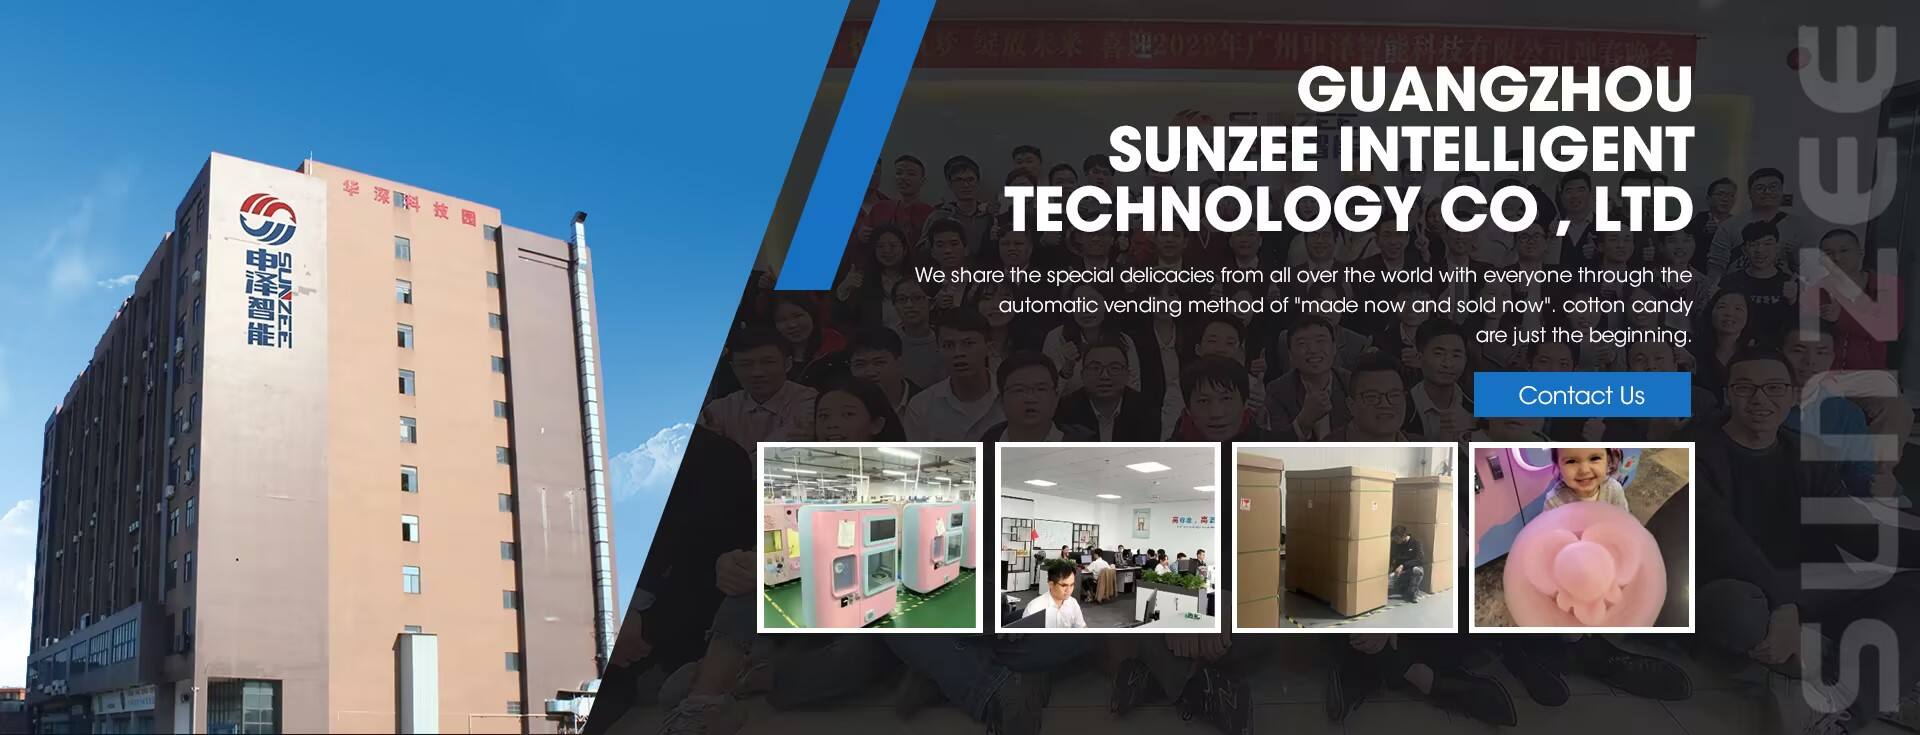 Guangzhou Sunzee බුද්ධිමත් තාක්ෂණ සමාගම, Ltd.